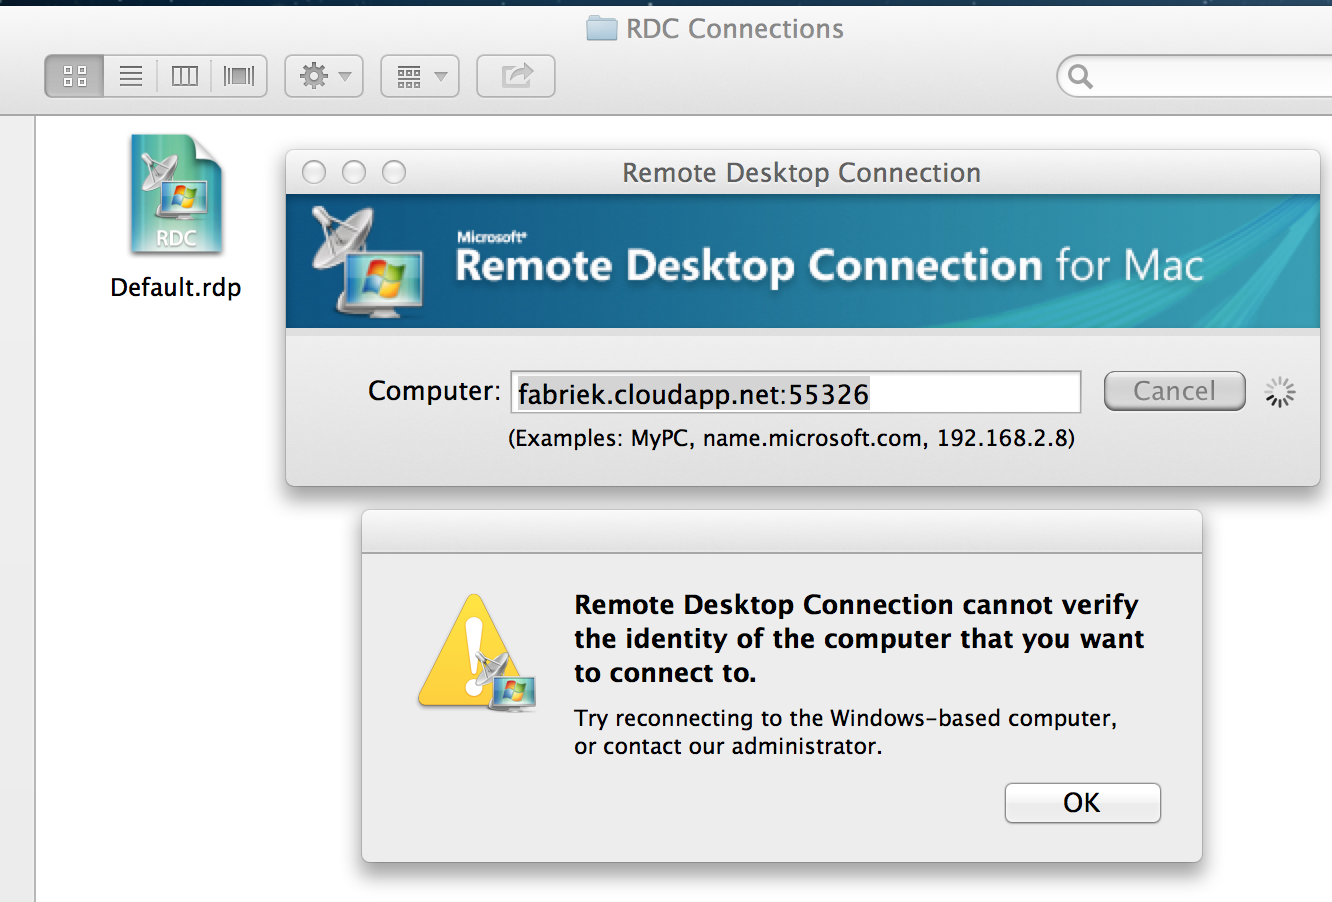 Remote Desktop Admin For Mac Os X